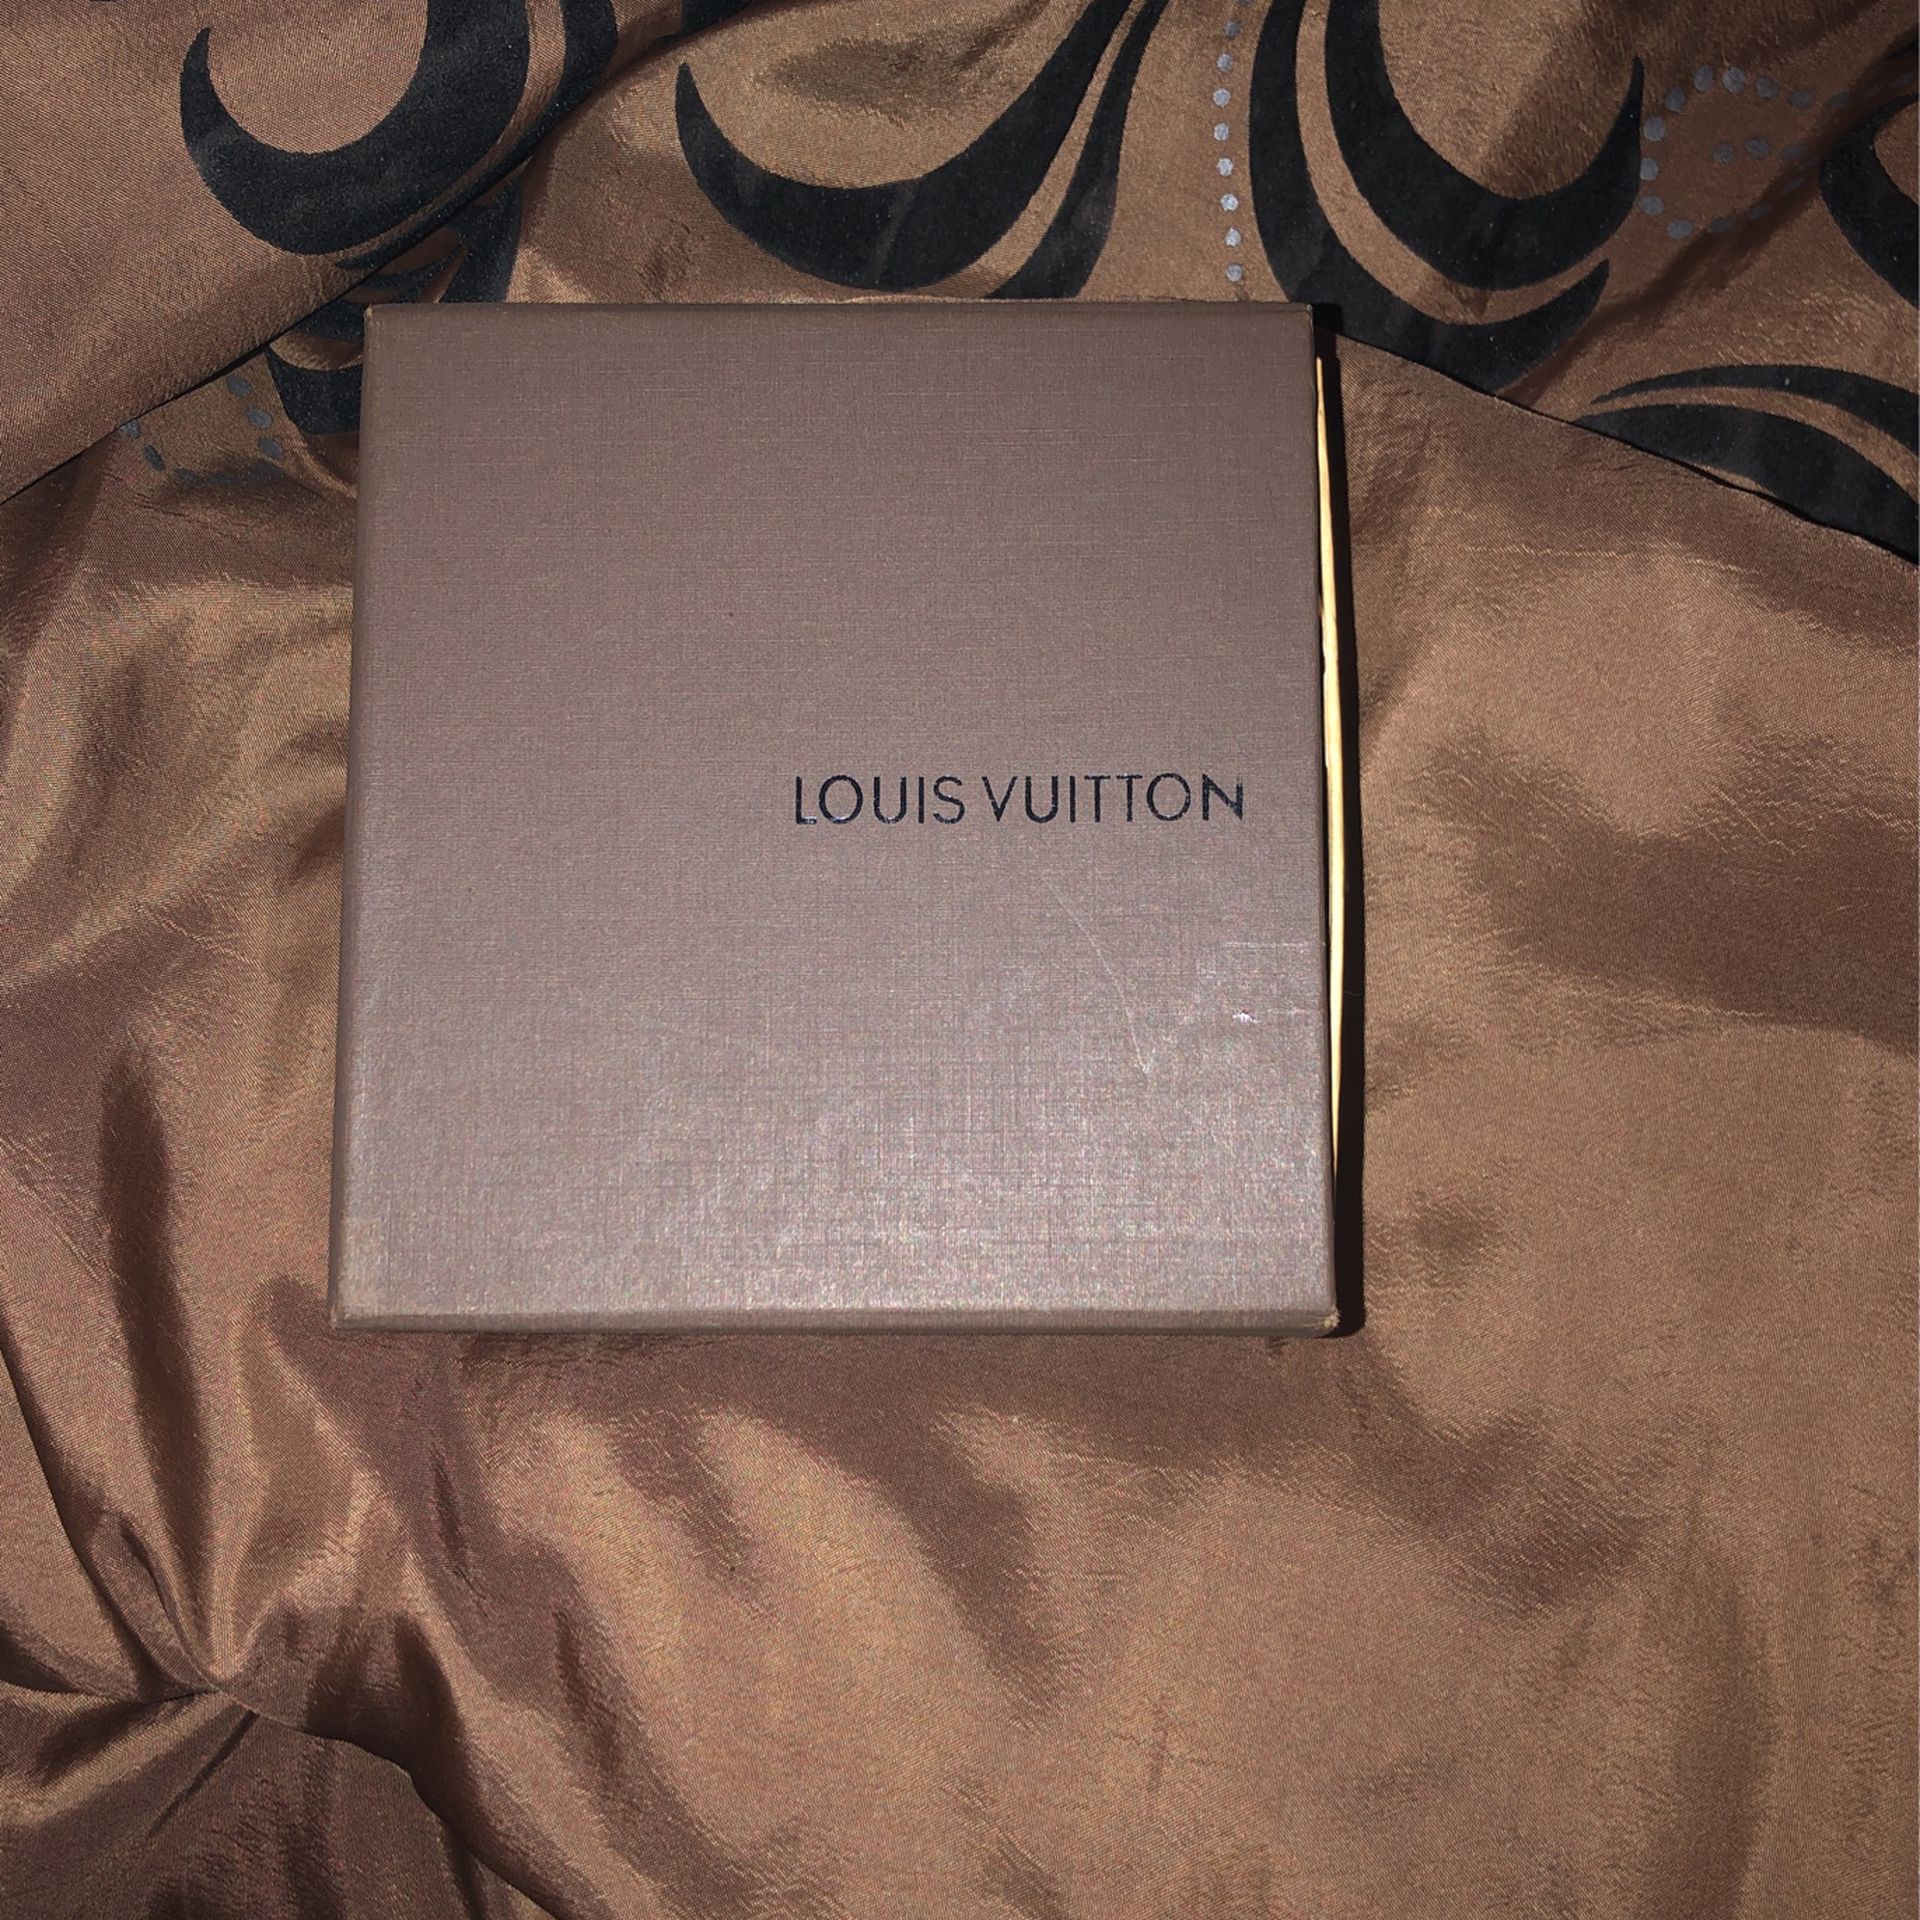 Louis Vuitton Belt for Sale in Lilburn, GA - OfferUp